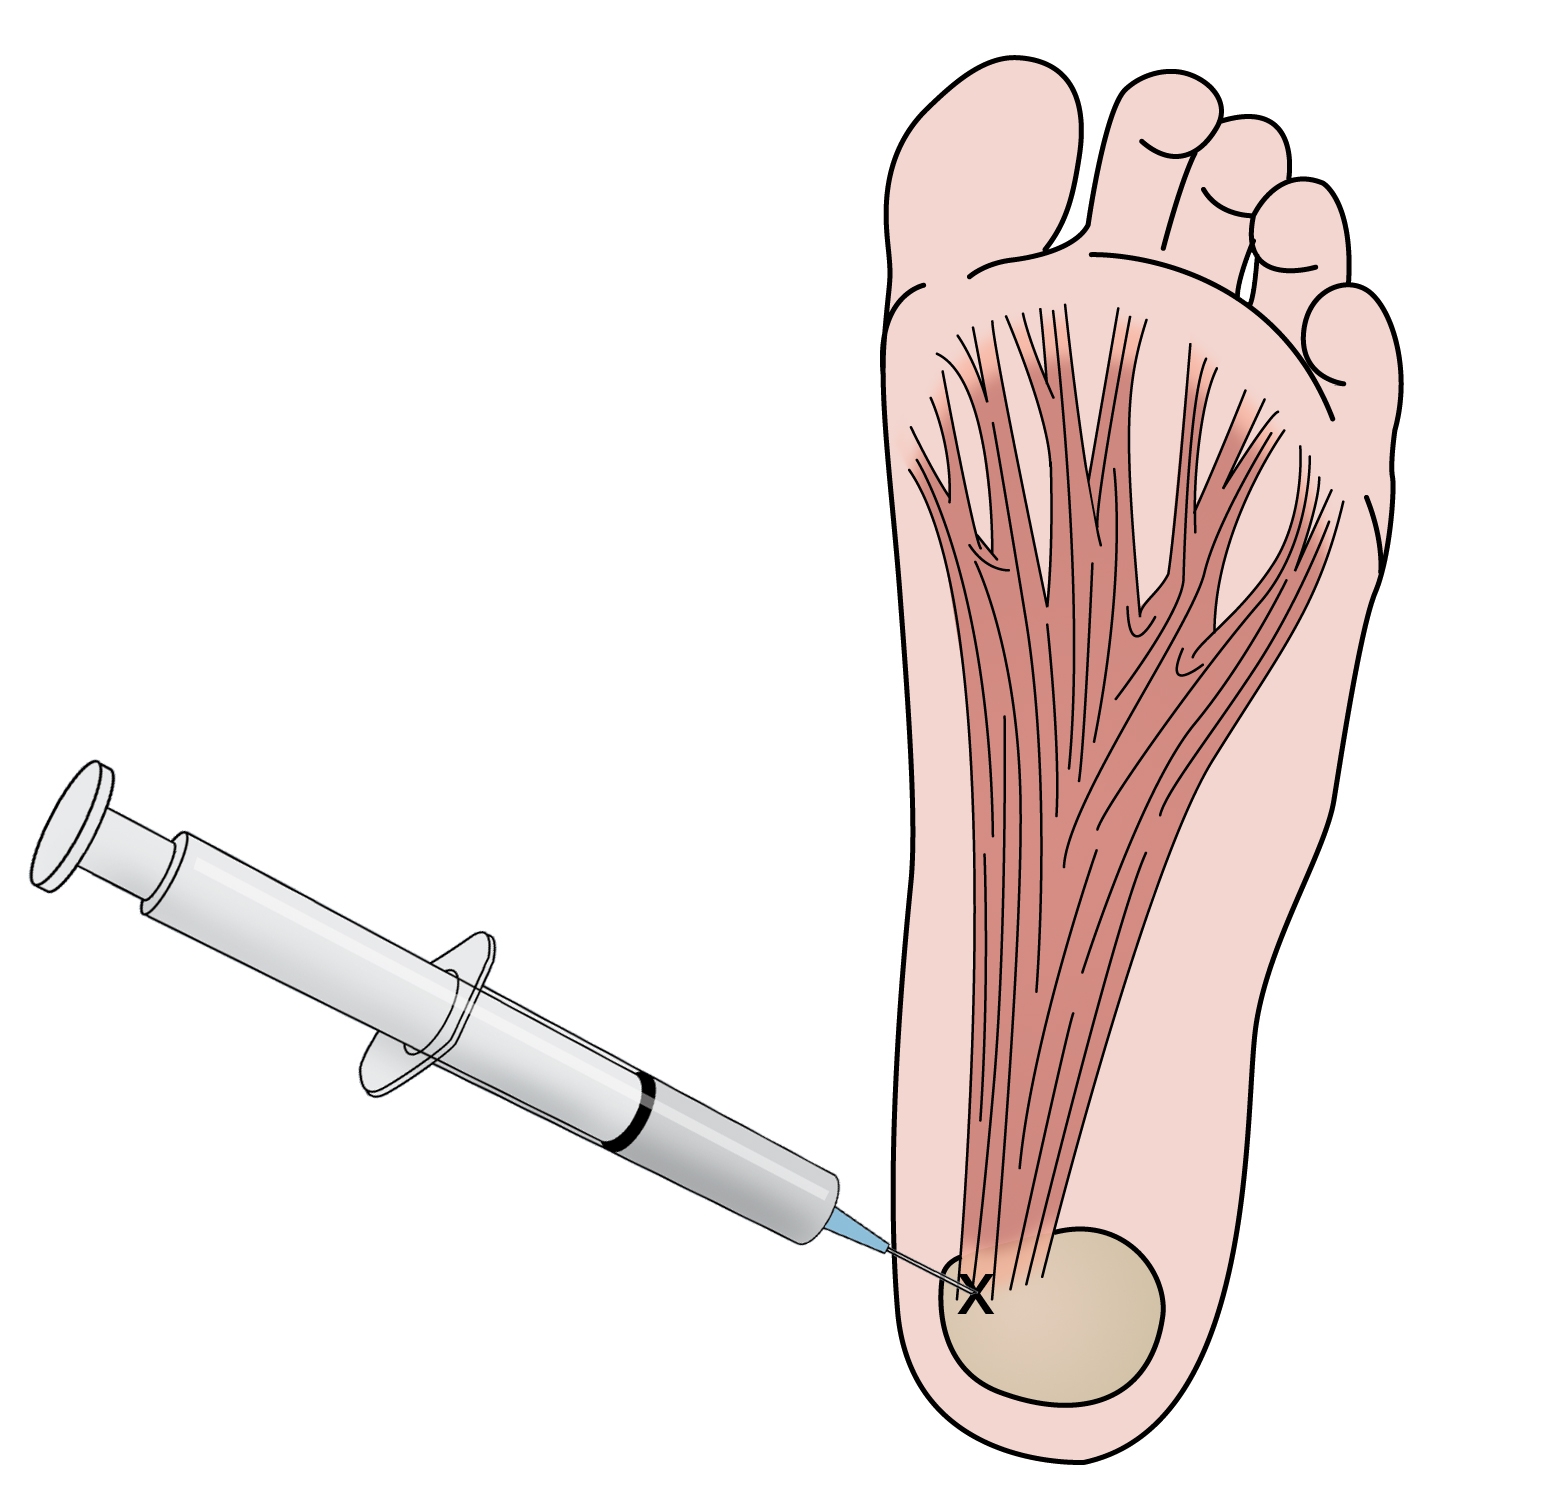 Figure 4: Plantar fasciitis injection